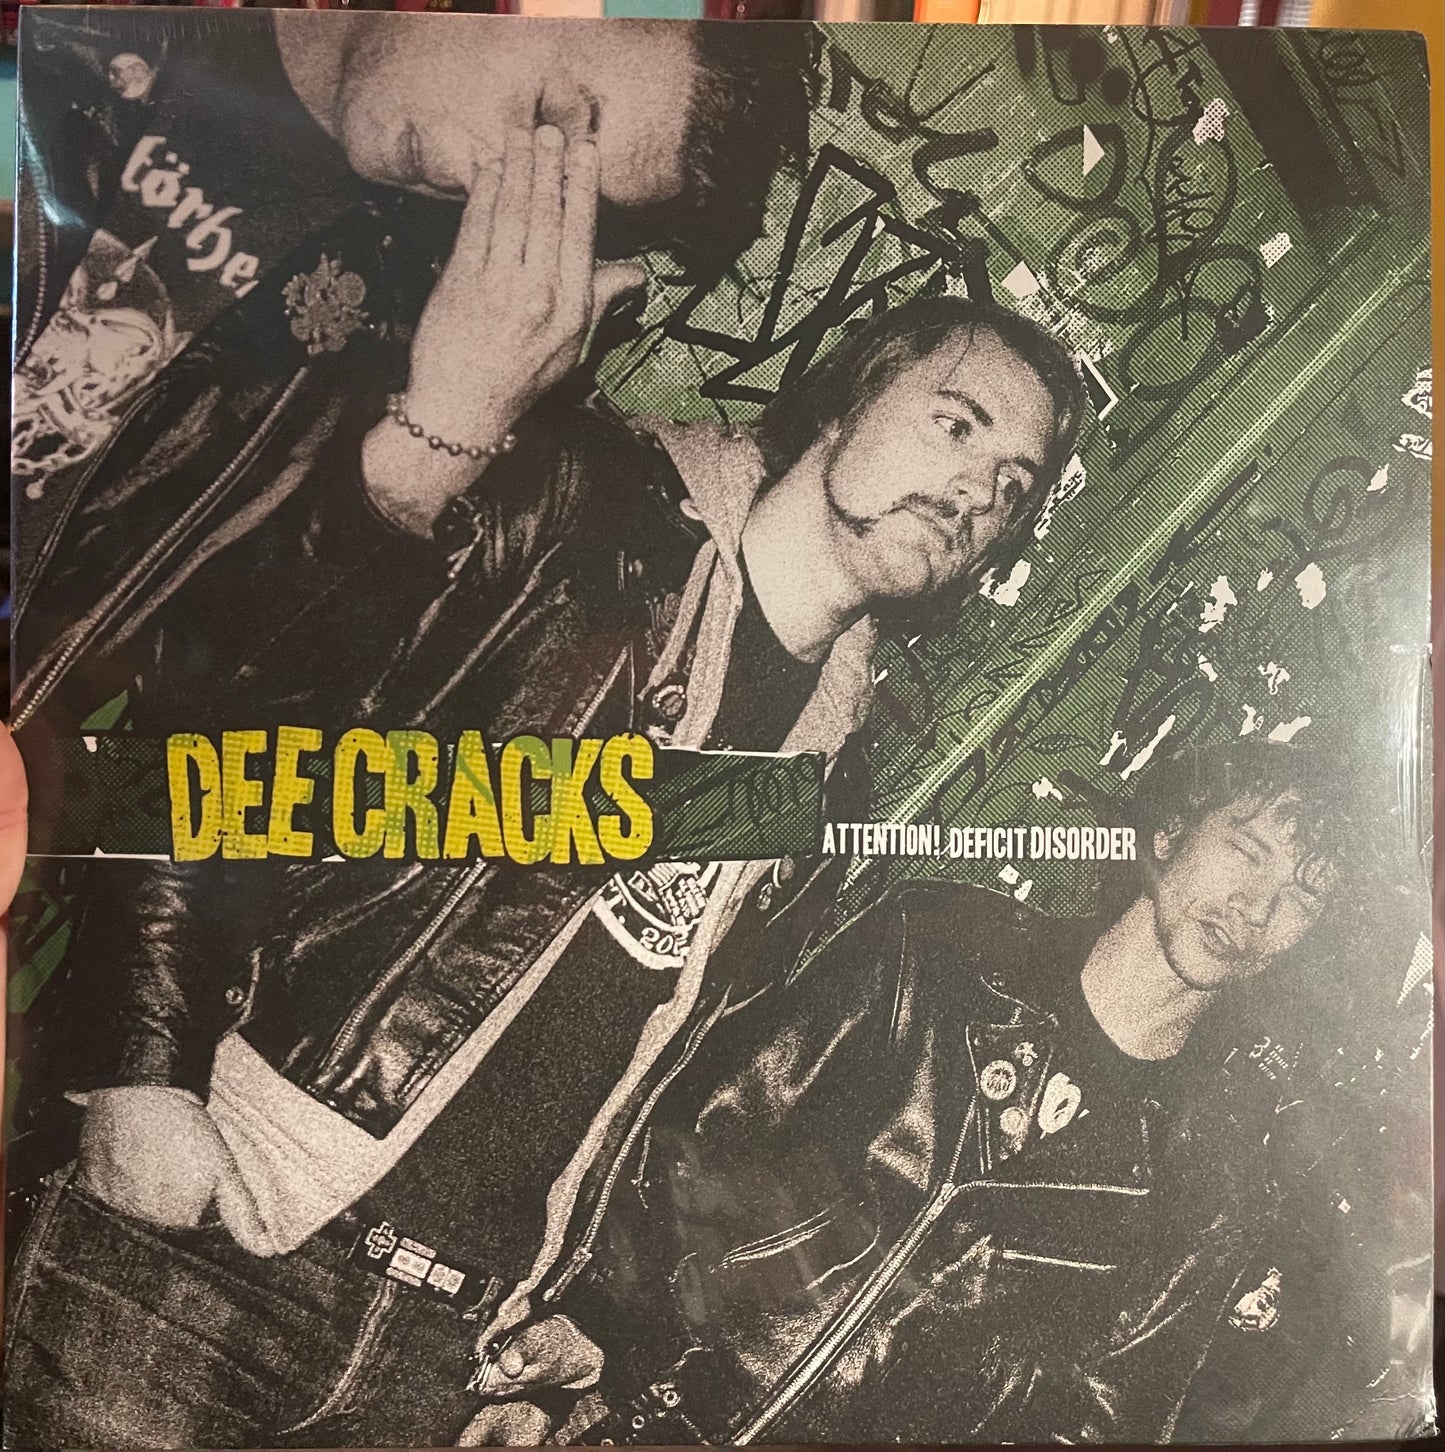 OMRDST-025 Dee Cracks “Attention! Deficit Disorder” 12 inch Vinyl LP